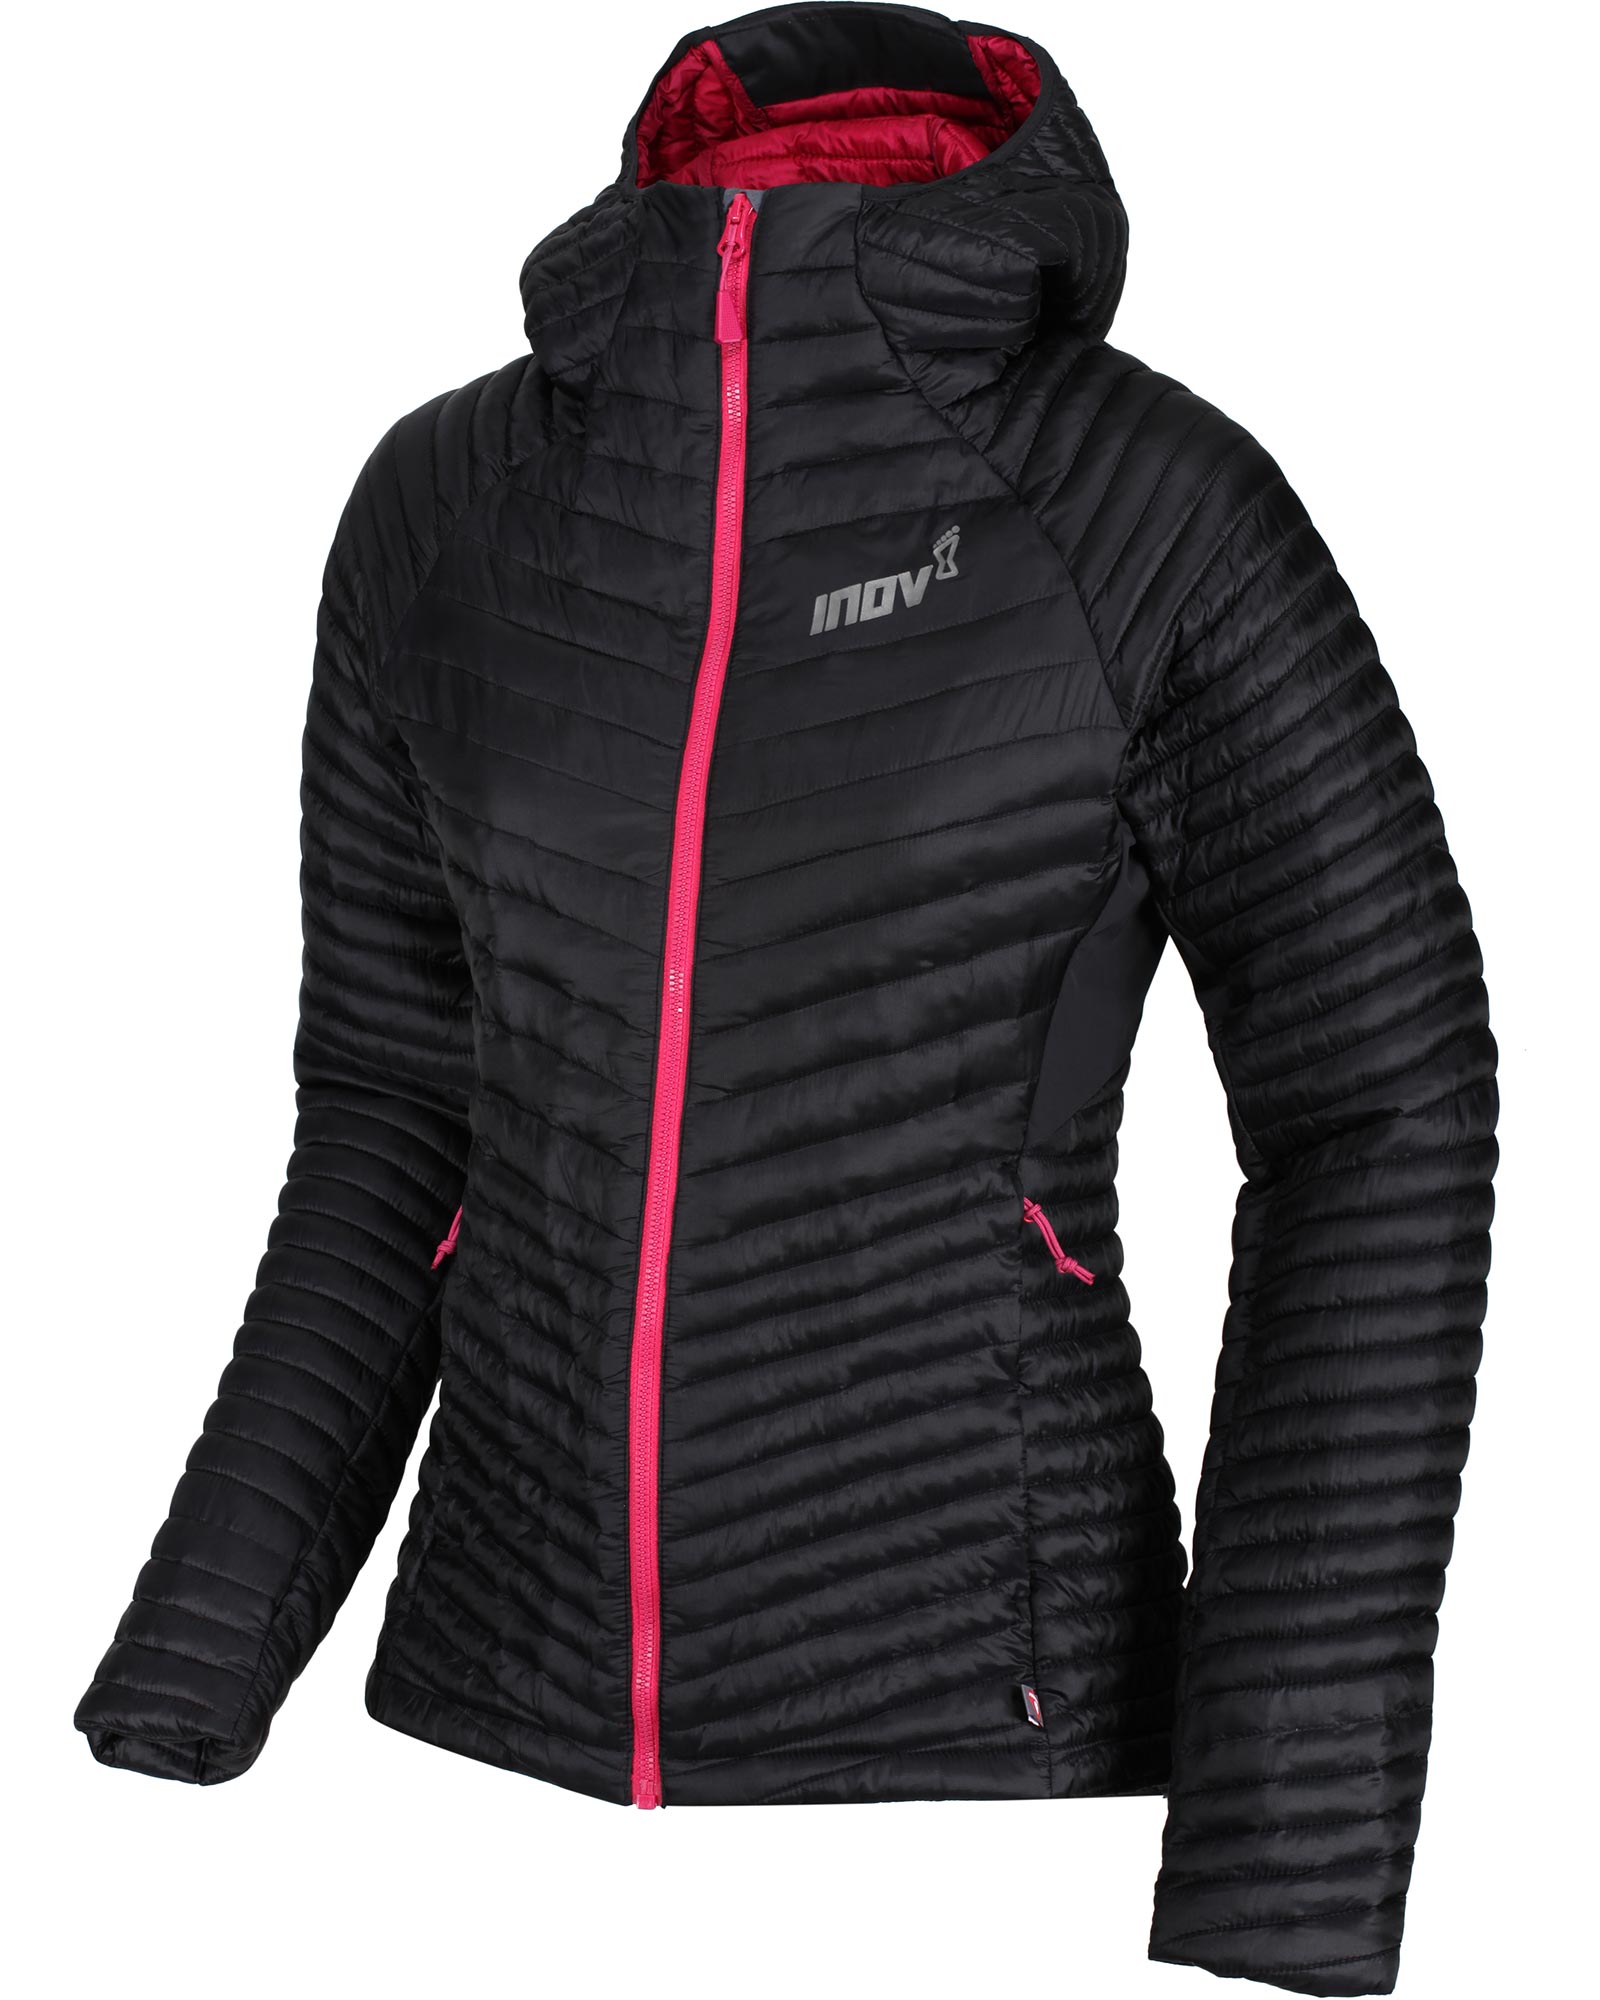 Inov 8 Full Zip Thermoshell Pro Women’s Jacket - black 8